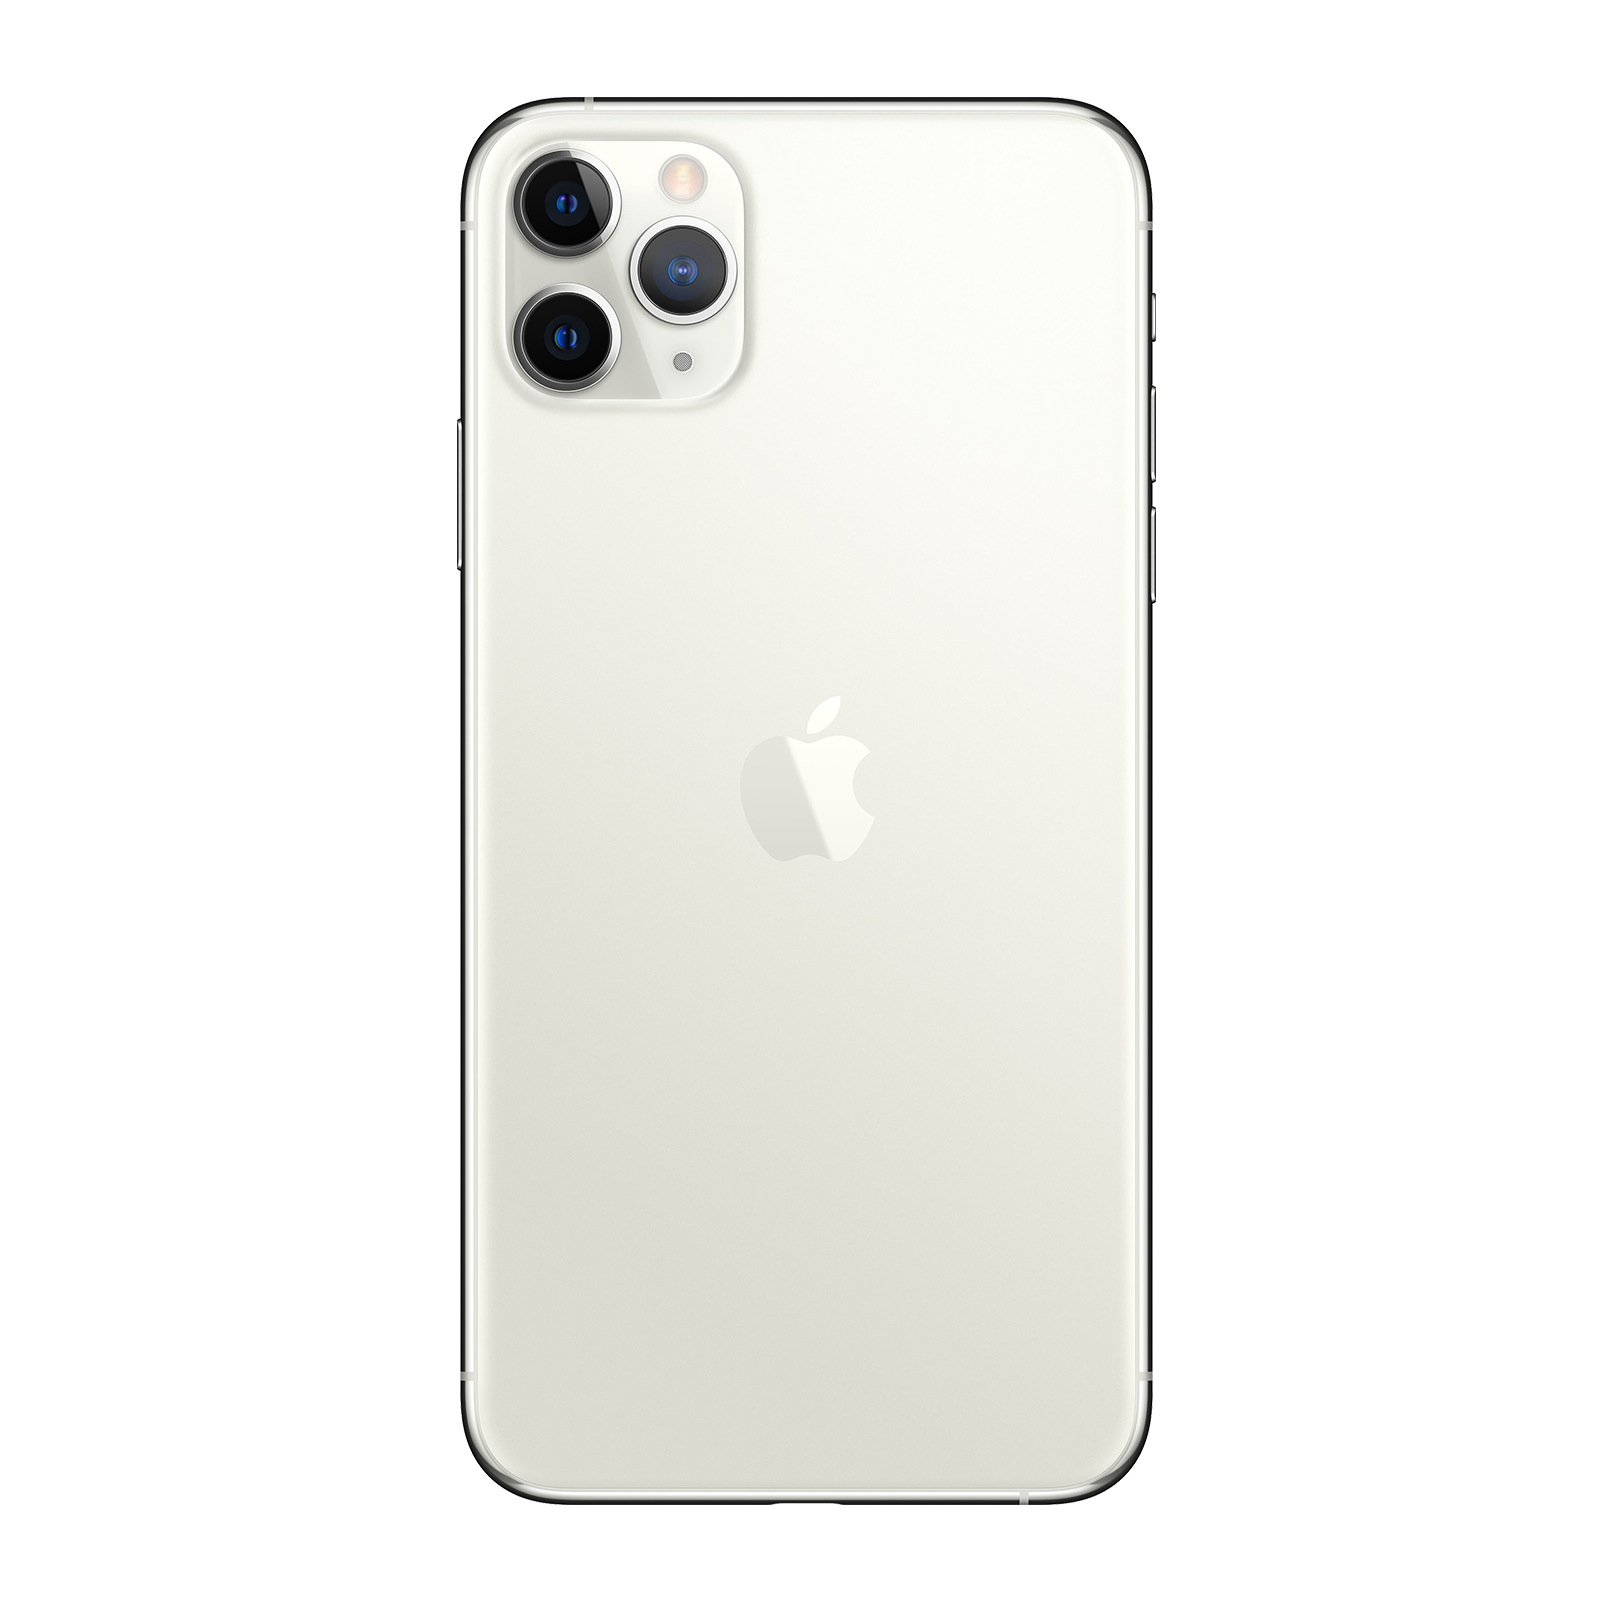 Apple iPhone 11 Pro Max 512GB Silver Fair - Unlocked